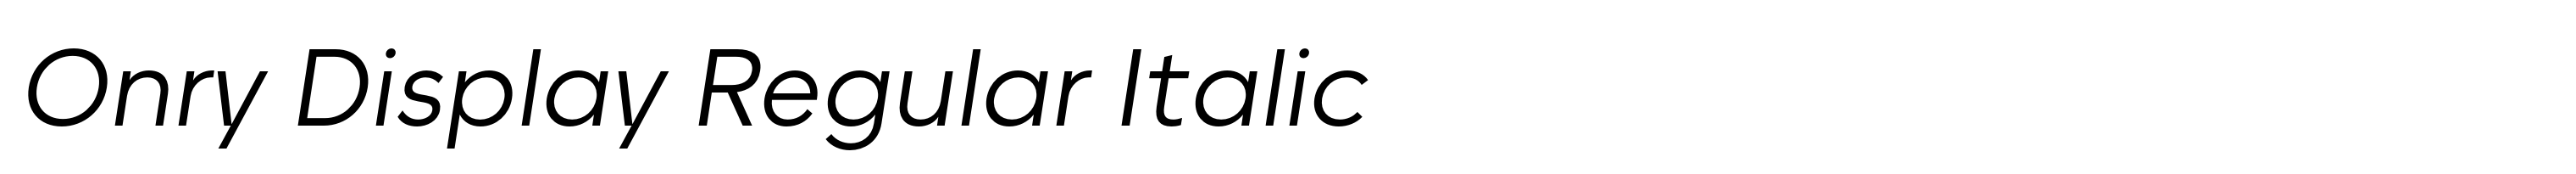 Onry Display Regular Italic